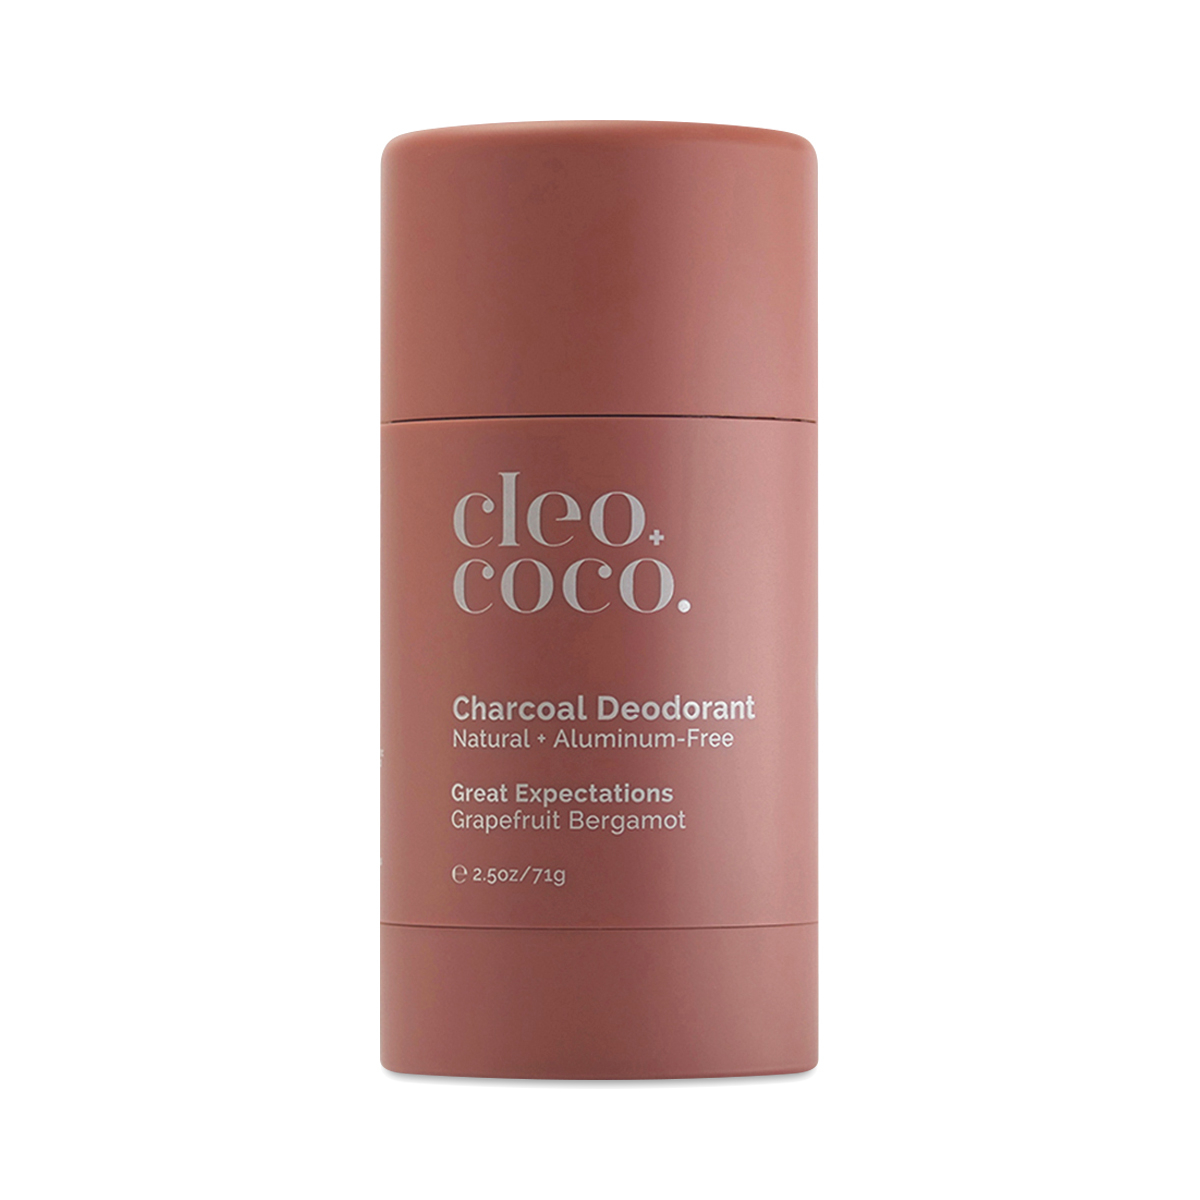 Cleo + Coco Great Expectations Charcoal Deodorant, Grapefruit Bergamot 2.5 oz stick